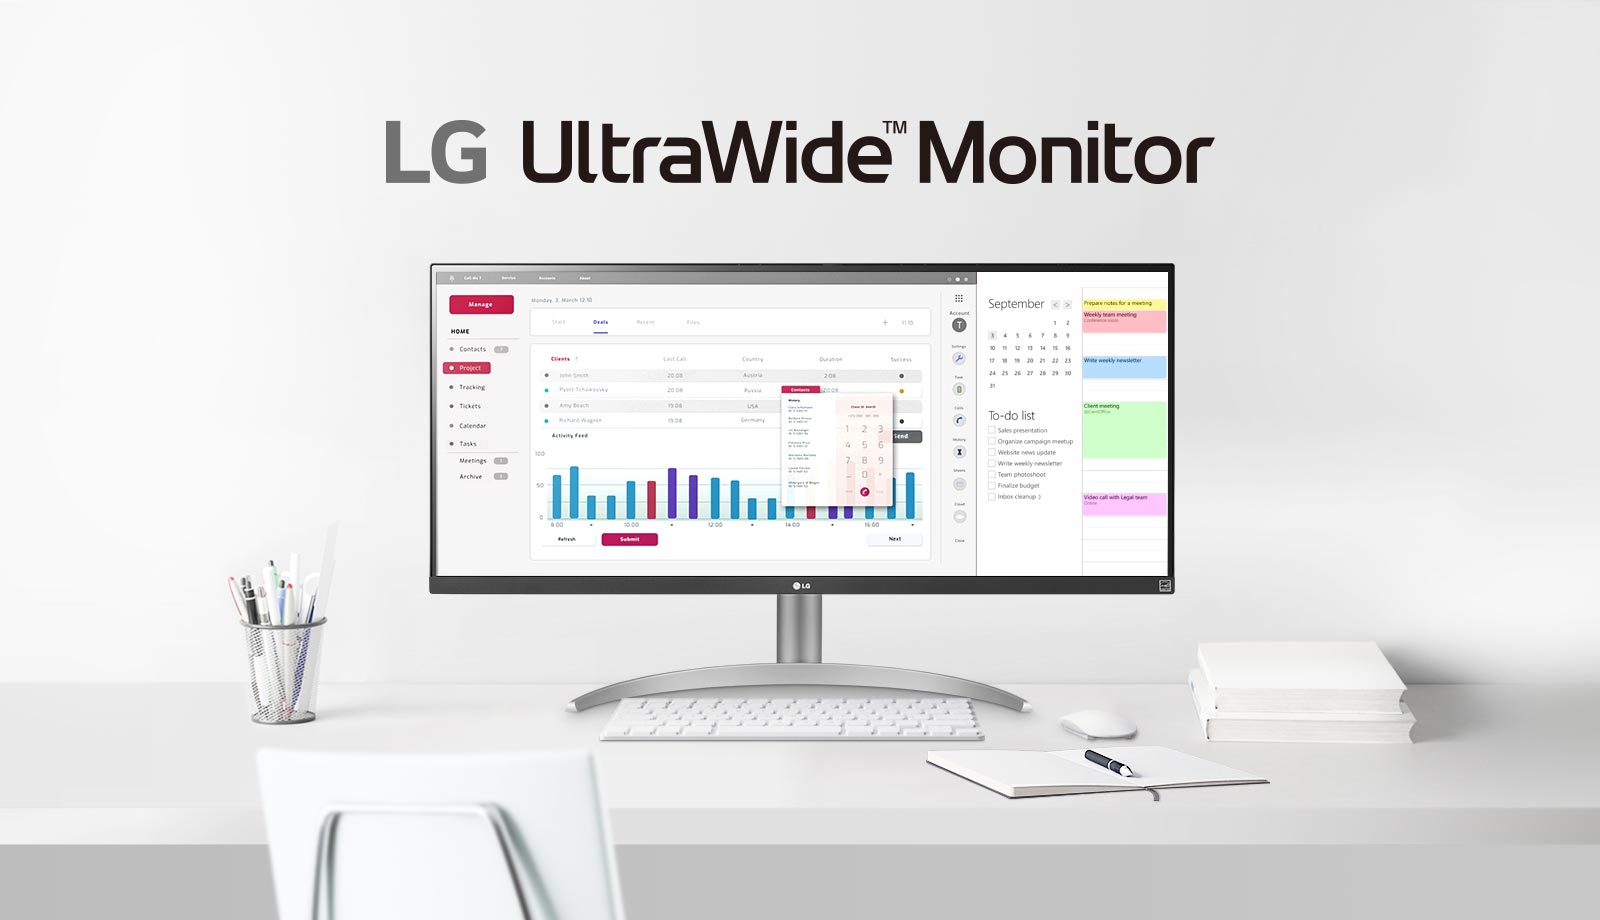 LG UltraWide™ monitor